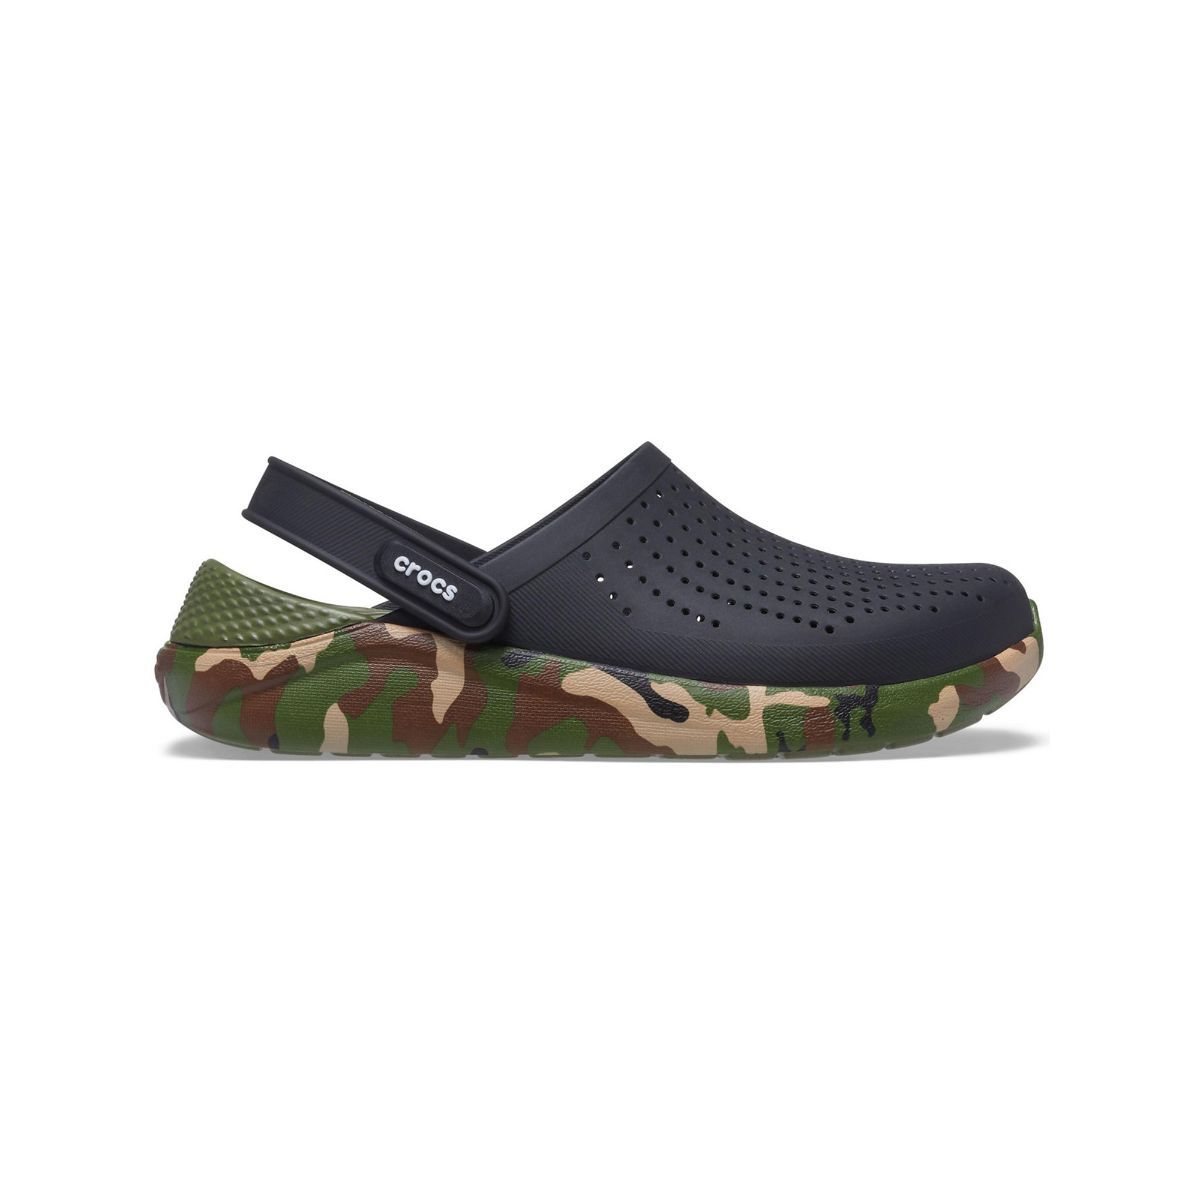 Buy Crocs Men's Navy Literide Clog Online at Regal Shoes |8276156